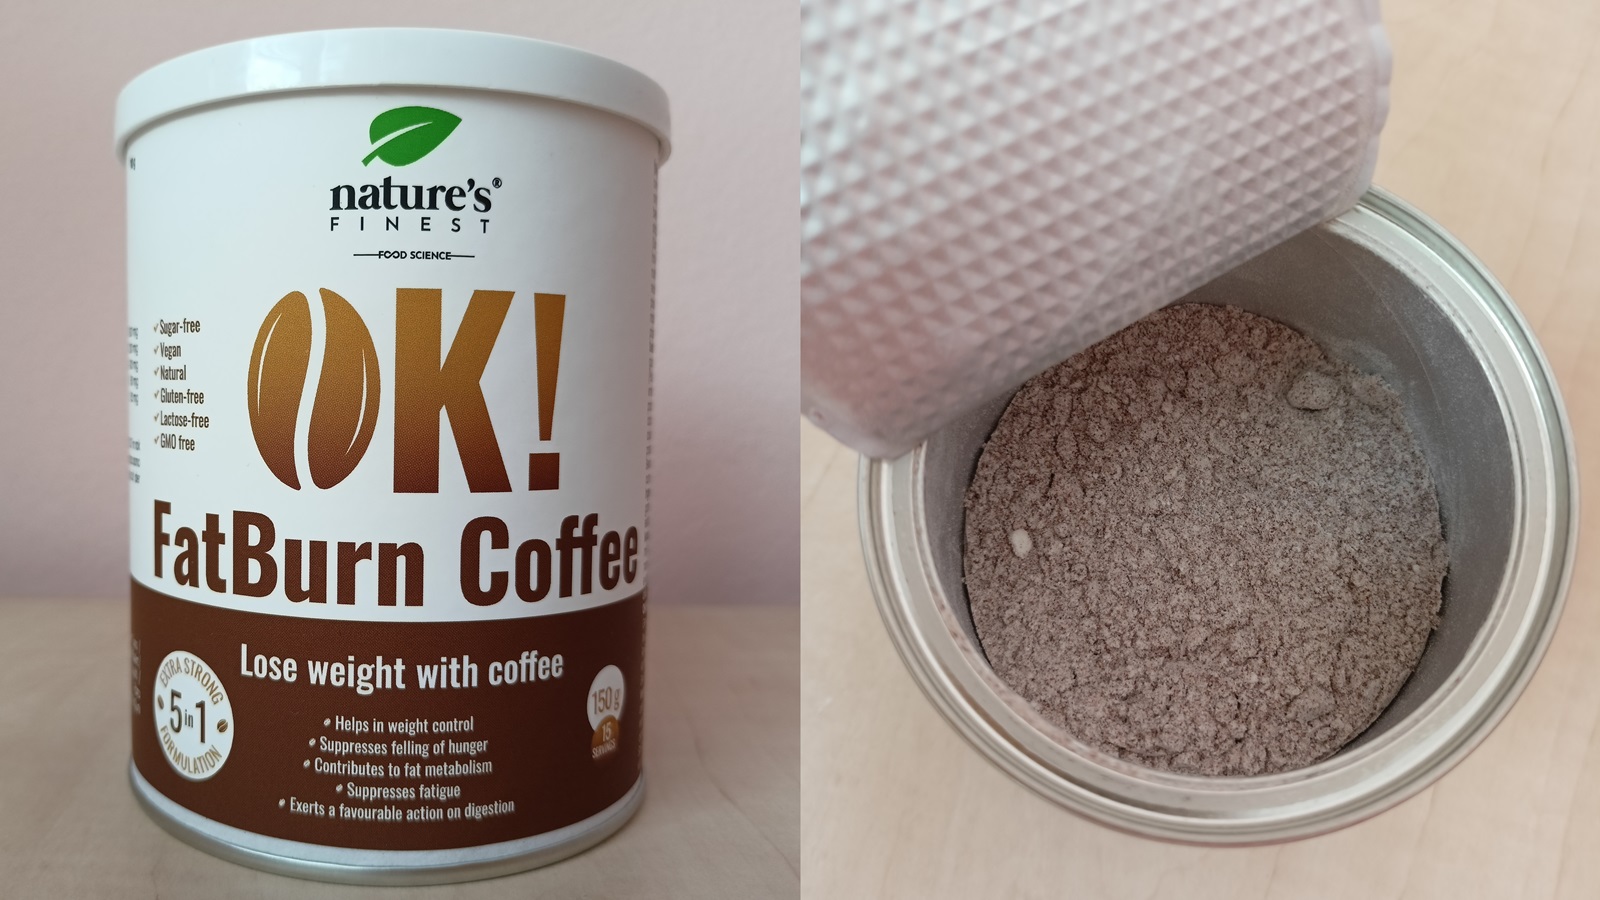 Recenze: OK! FatBurn Coffee od Nature’s Finest